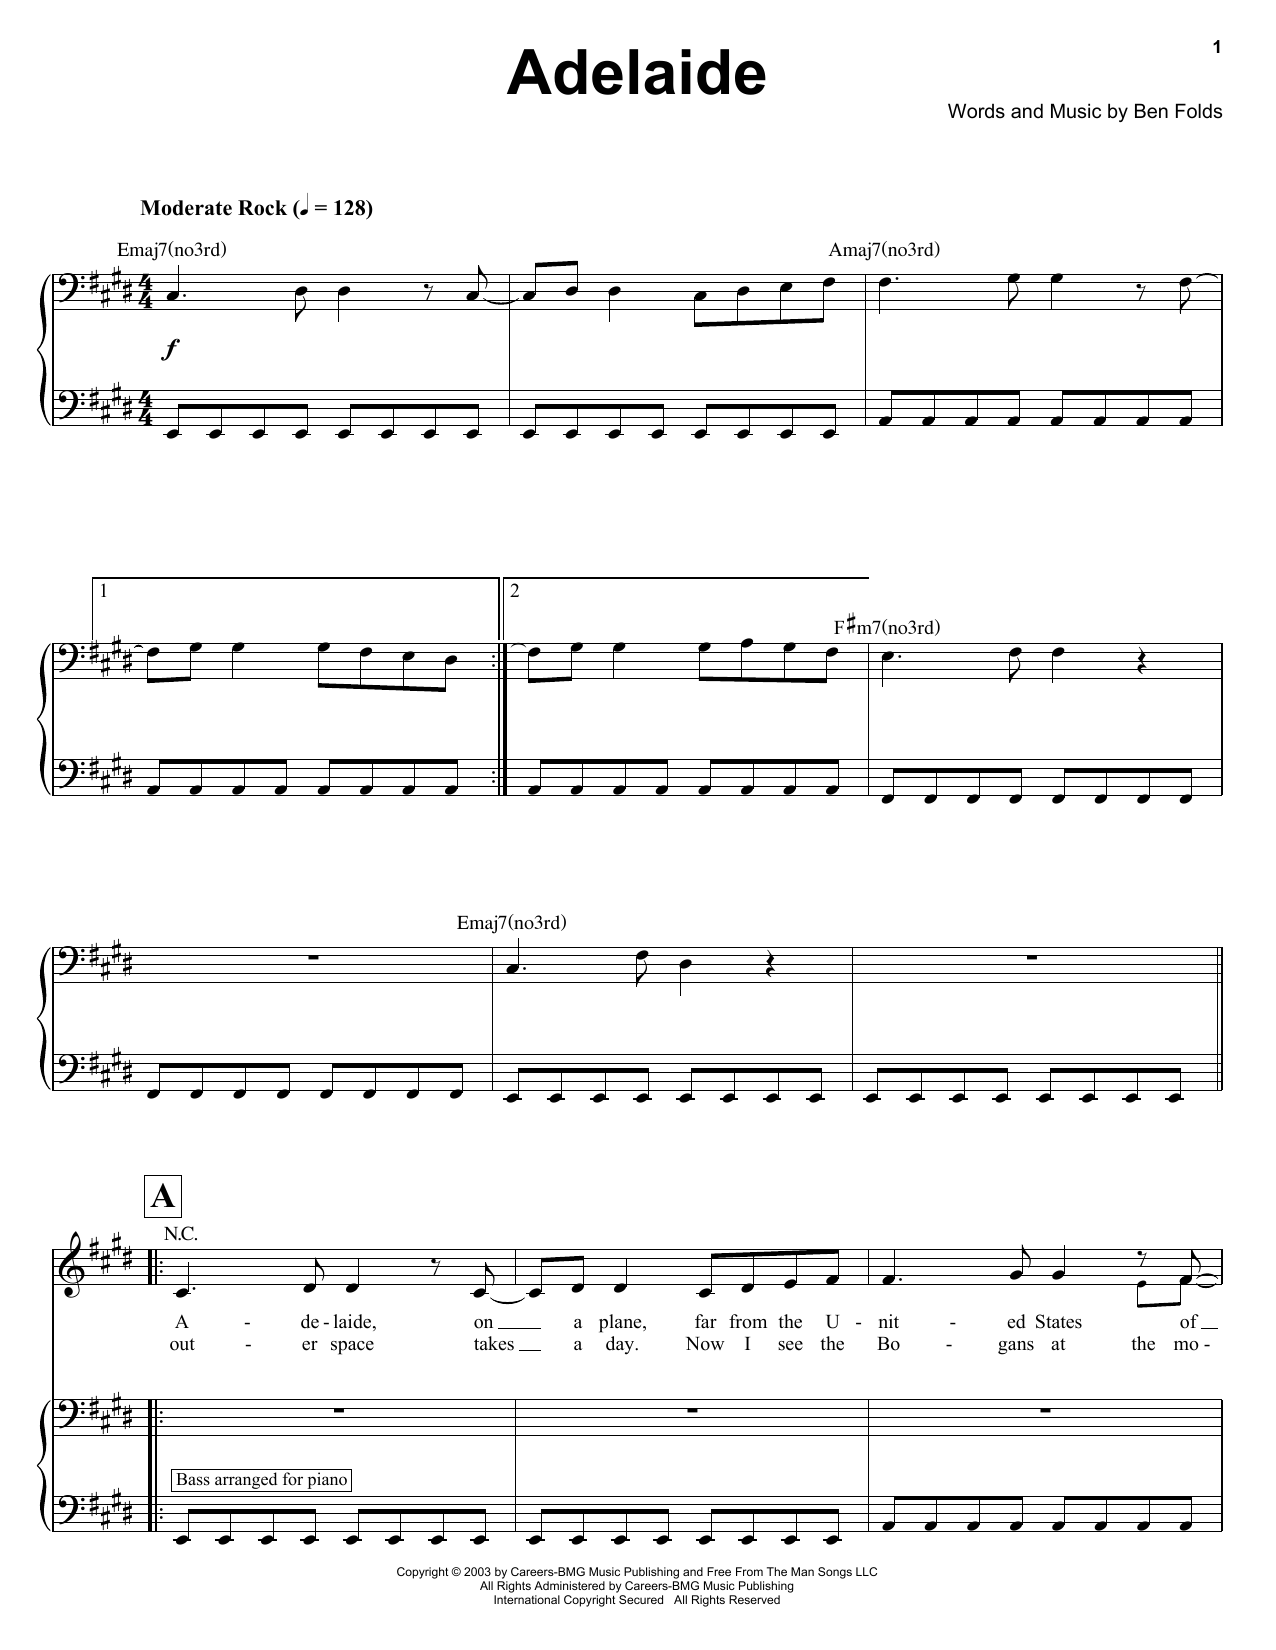 Ben Folds Adelaide Sheet Music Notes & Chords for Keyboard Transcription - Download or Print PDF